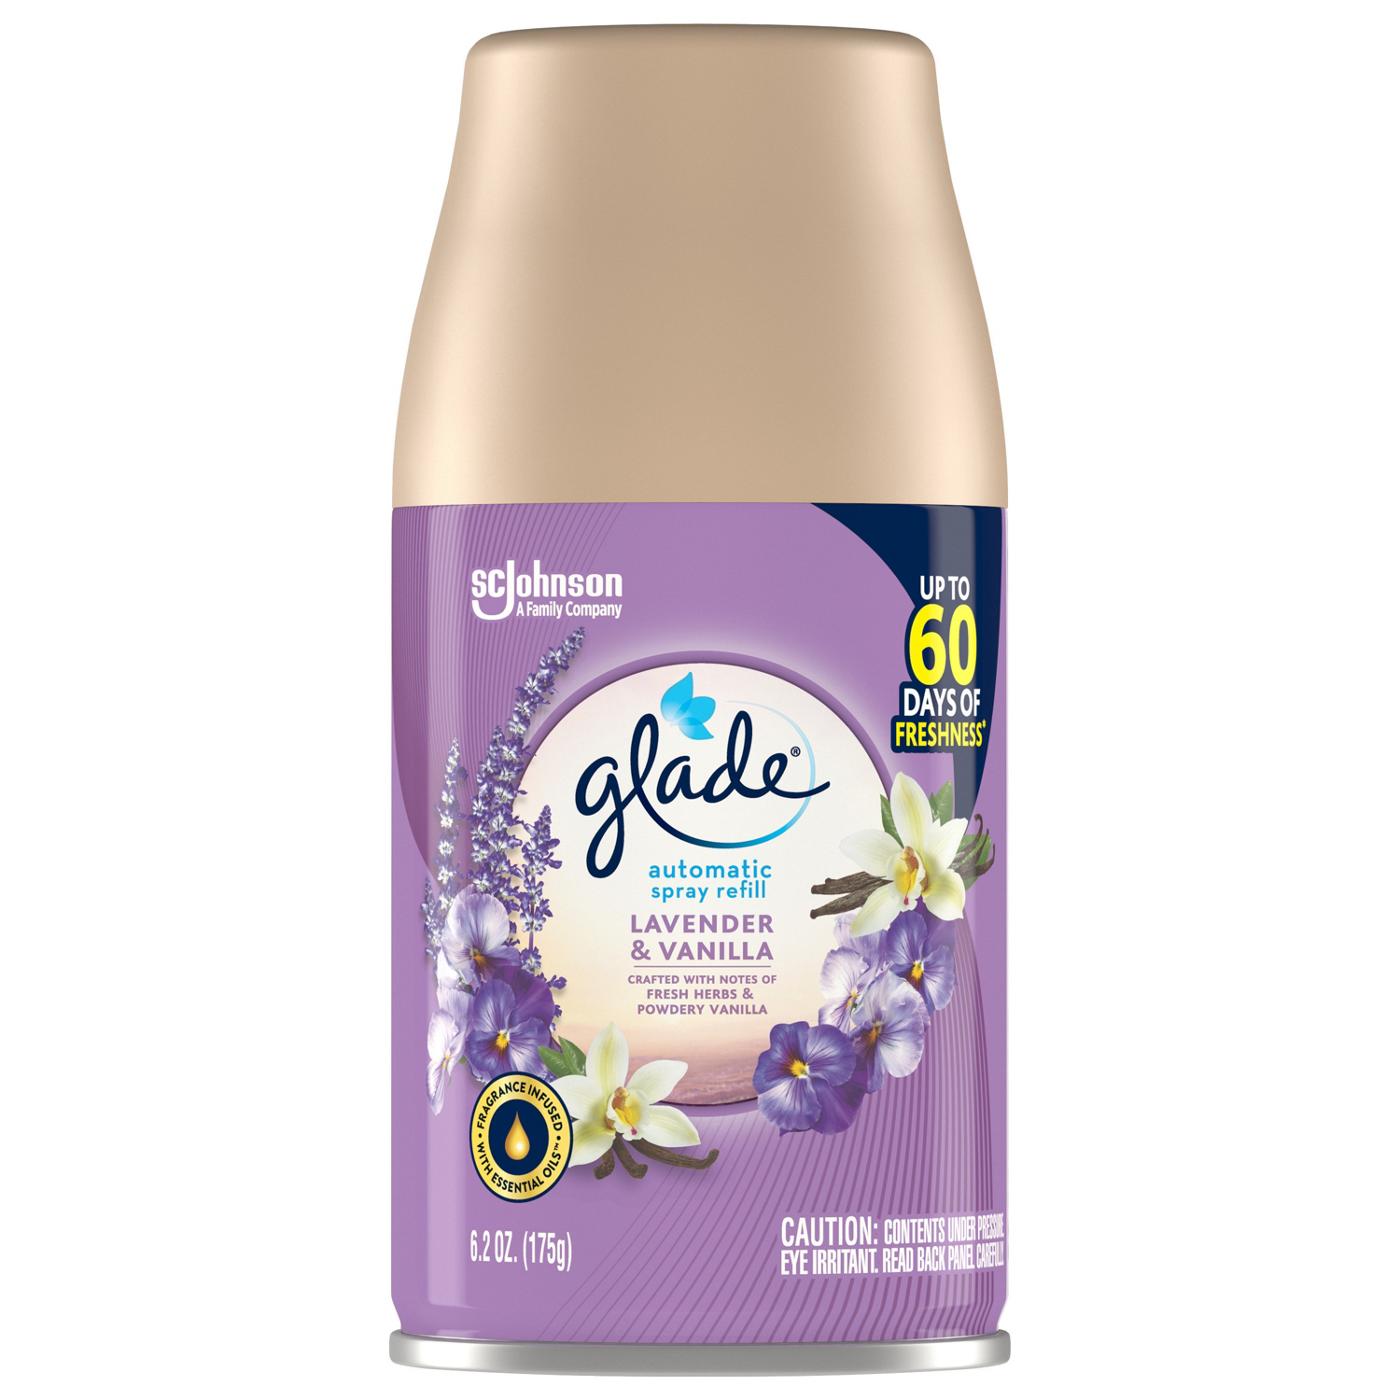 Glade Automatic Spray Refill - Lavender & Vanilla; image 1 of 2